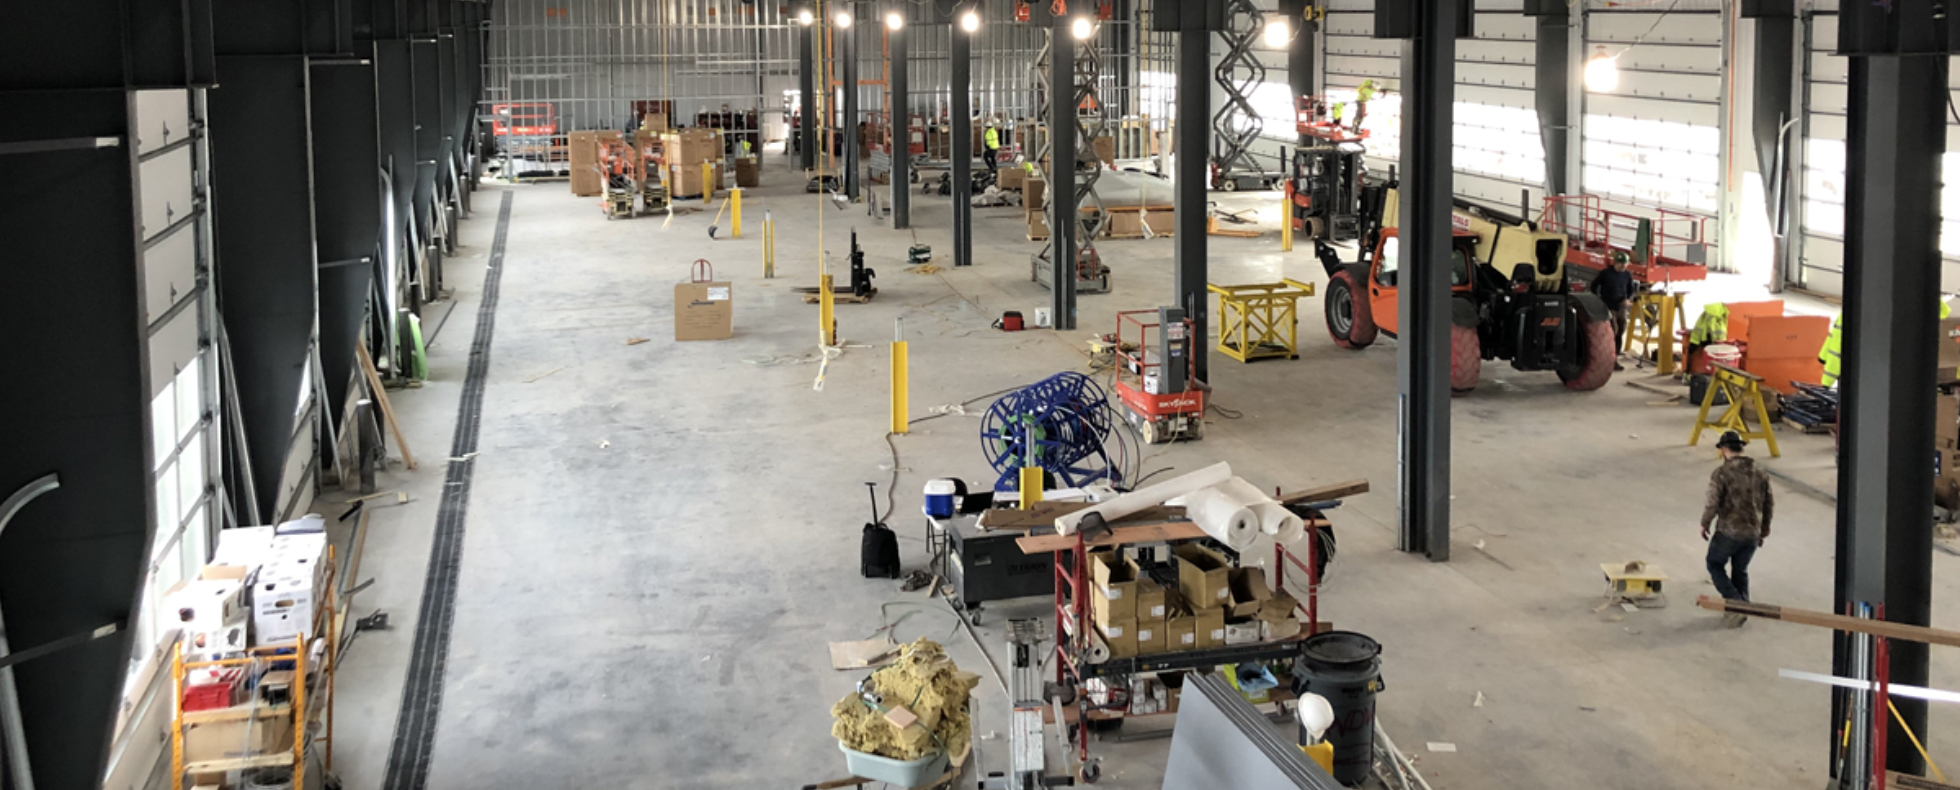 Construction Update: February Progress of RDO Equipment Co. in Dayton, MN